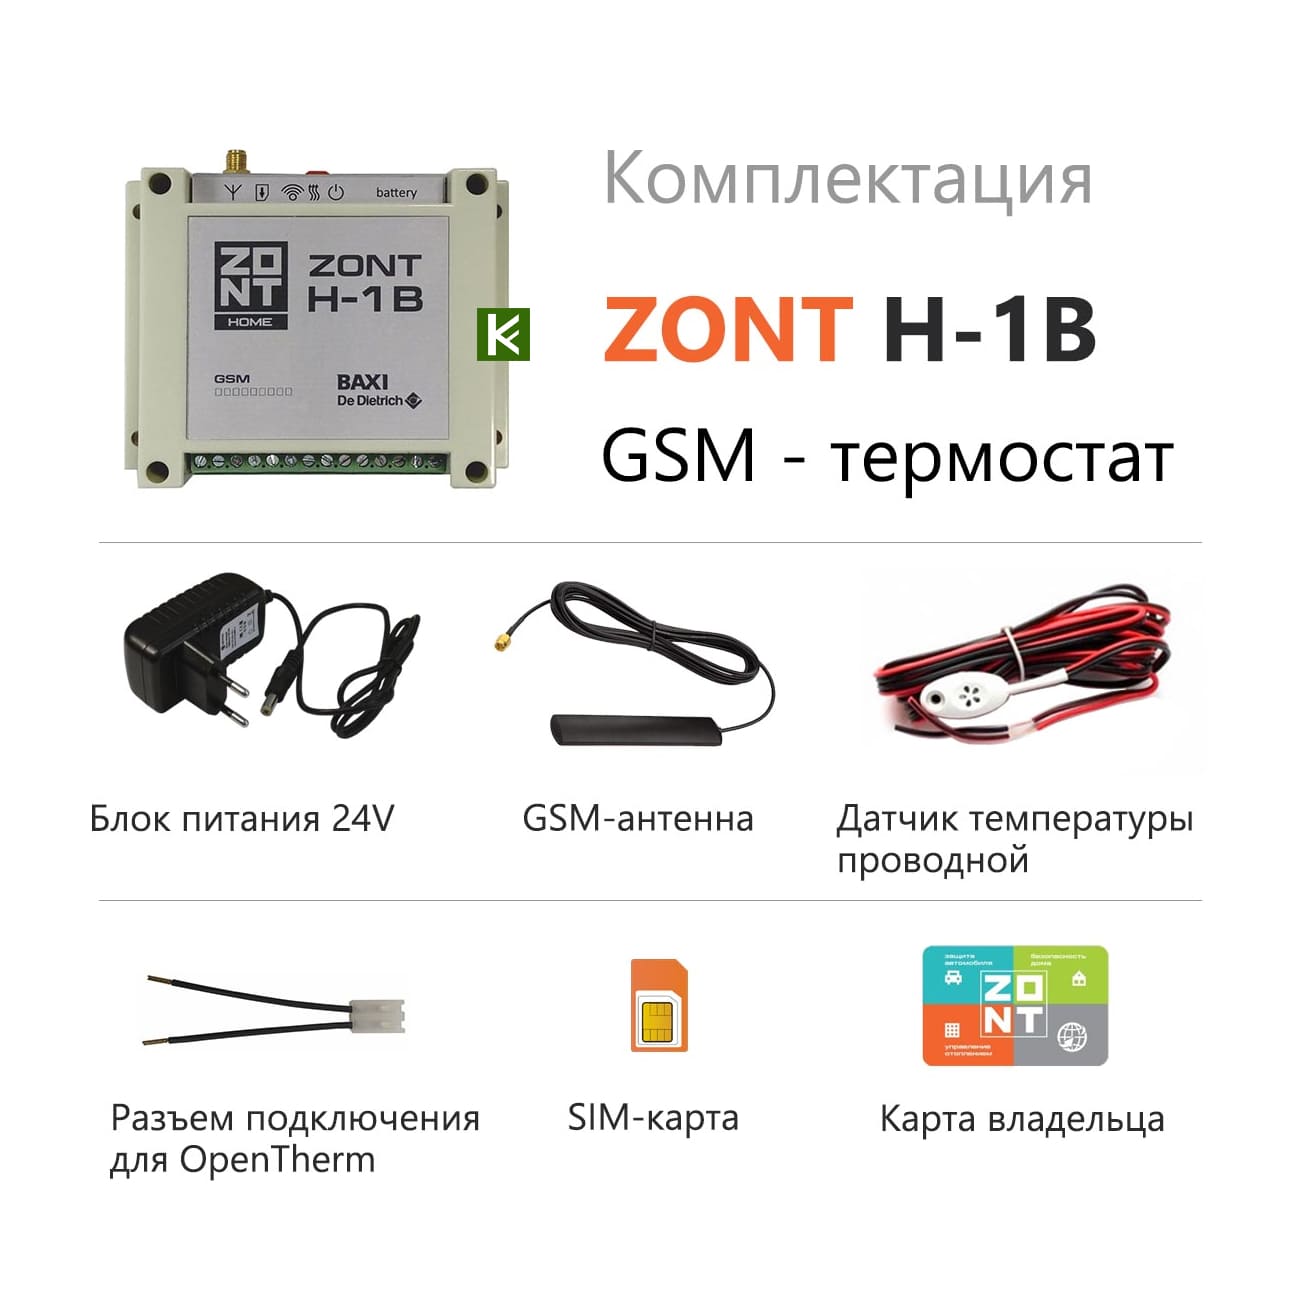 Zont h подключения. Zont h-1v Baxi OPENTHERM. GSM Zont h-1v. Система удаленного управления котлом Zont-h1b Baxi. Zont h-1 контроллер.